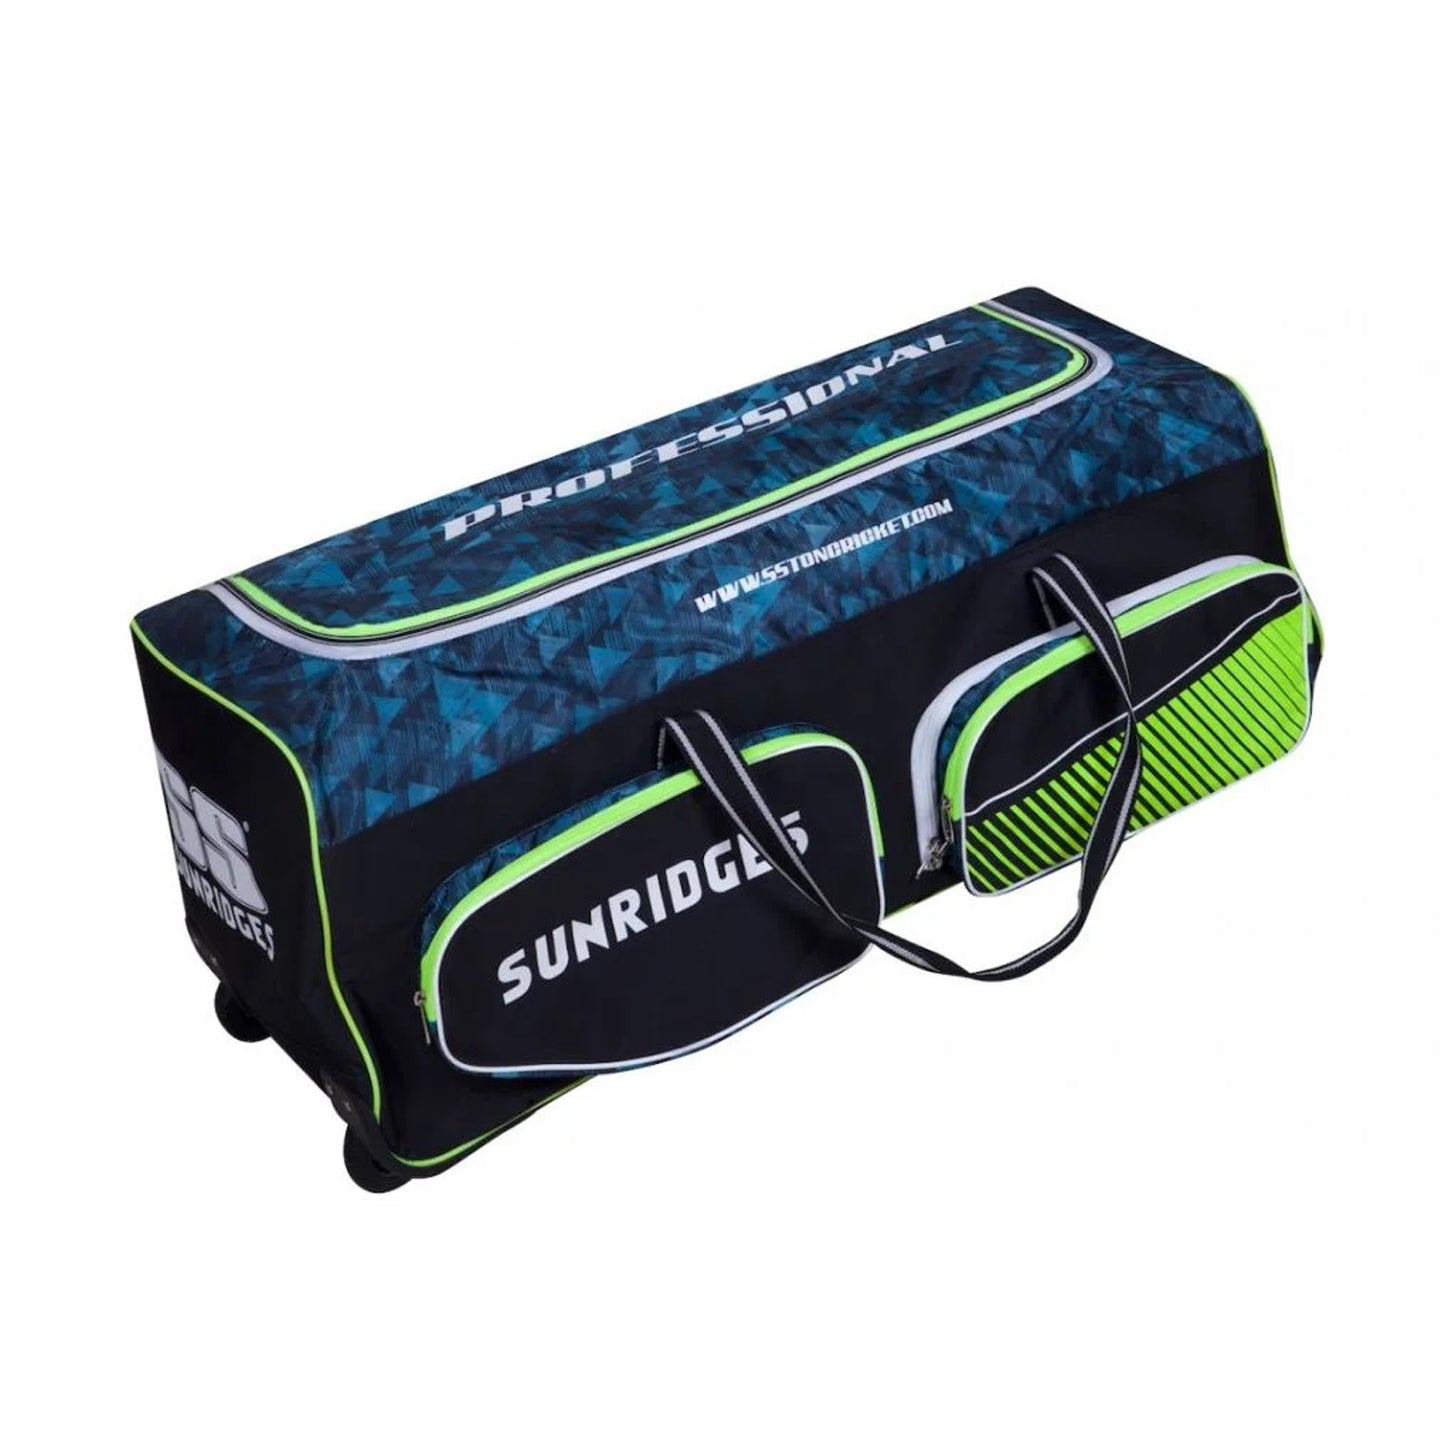 SS Professional Wheel Cricket Kit Bag , Black/Lime - Best Price online Prokicksports.com